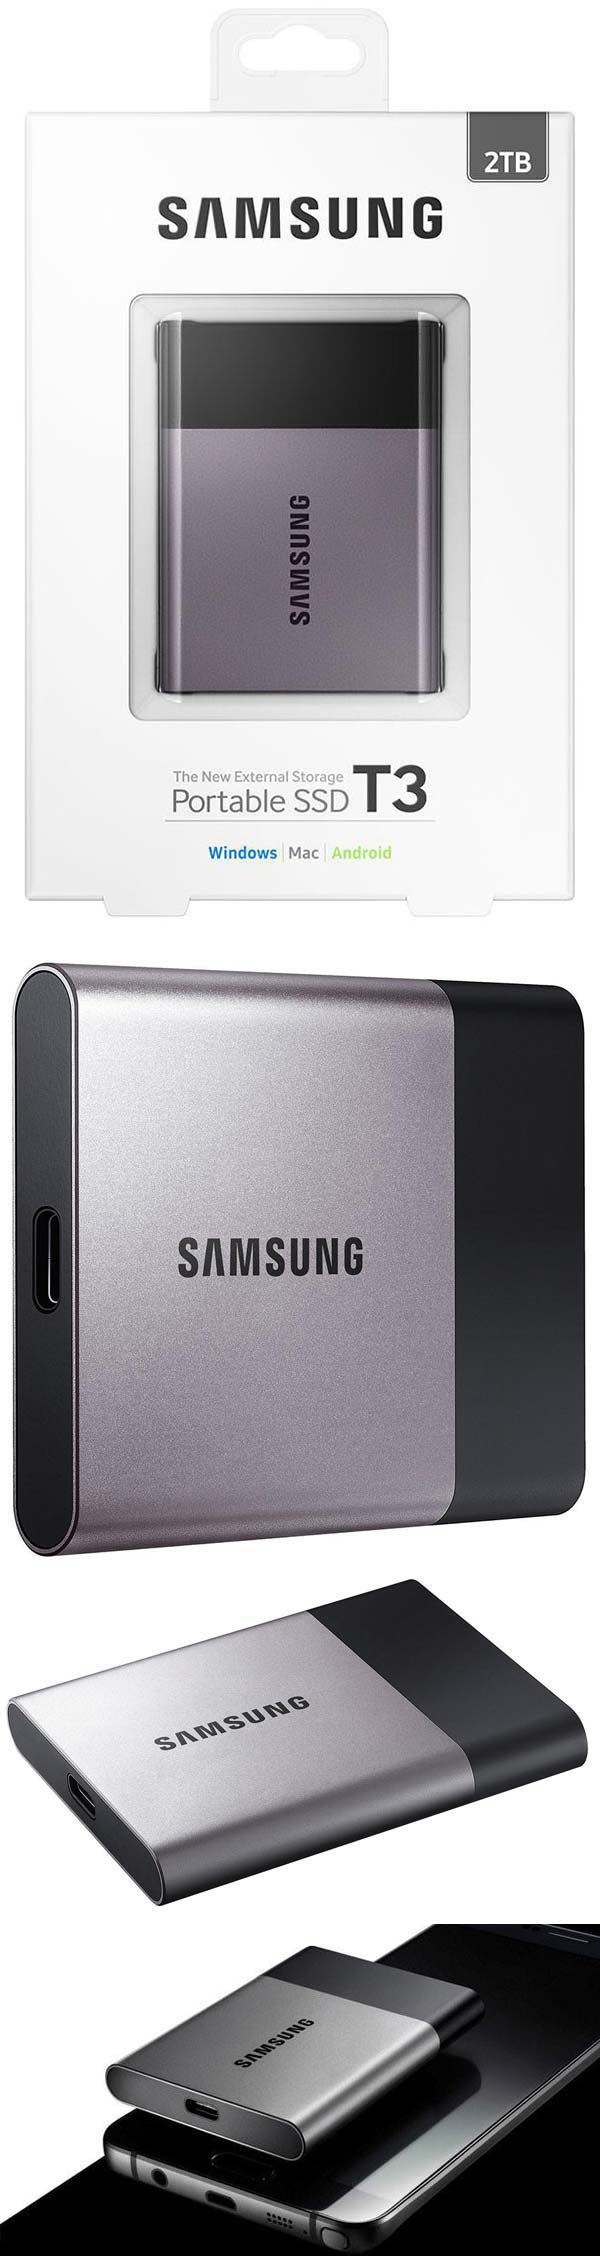 На фото можно увидеть Samsung Portable SSD T3